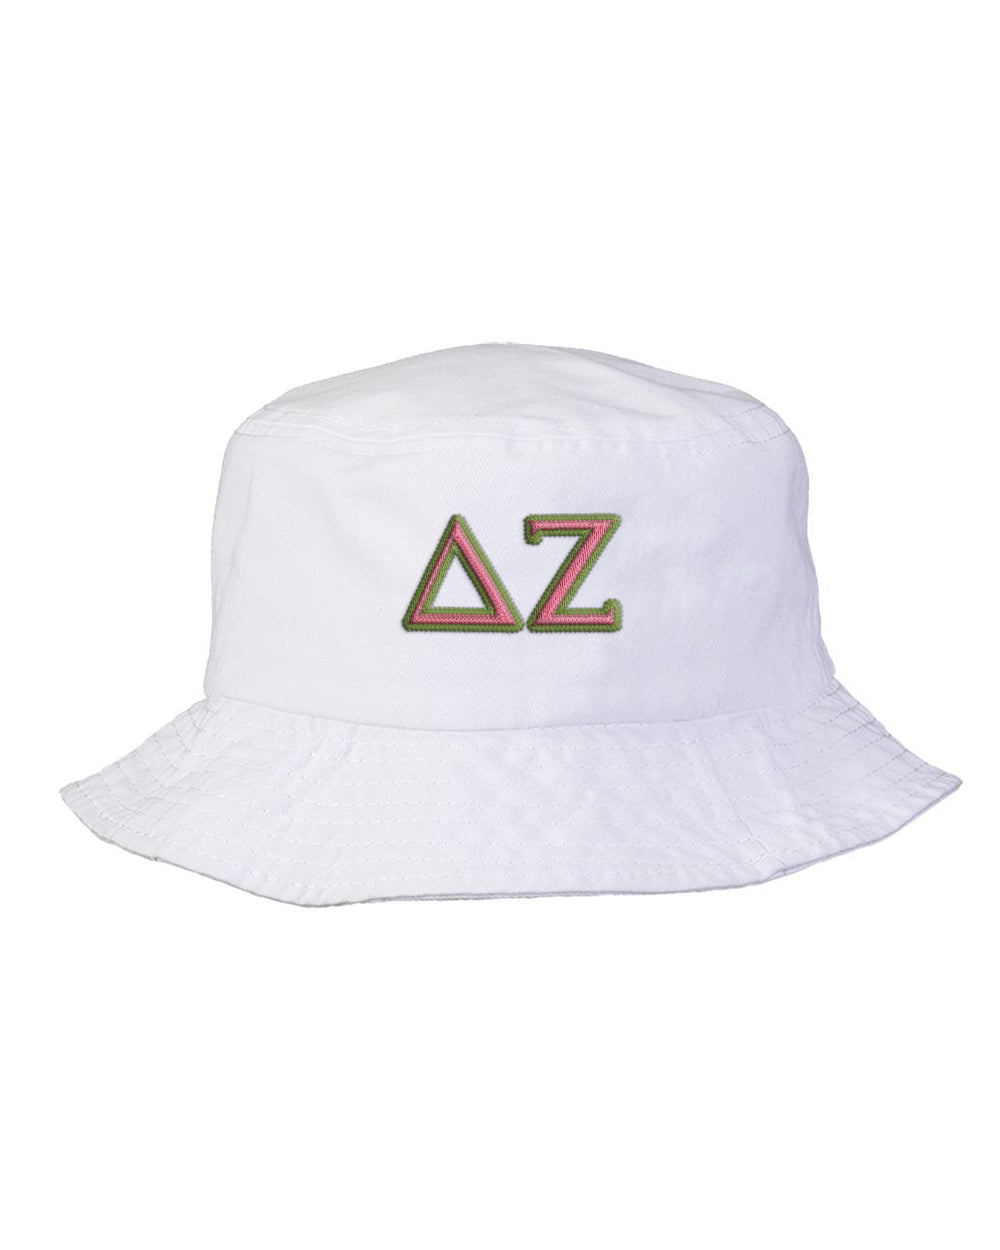 Delta Zeta Embroidered Bucket Hat